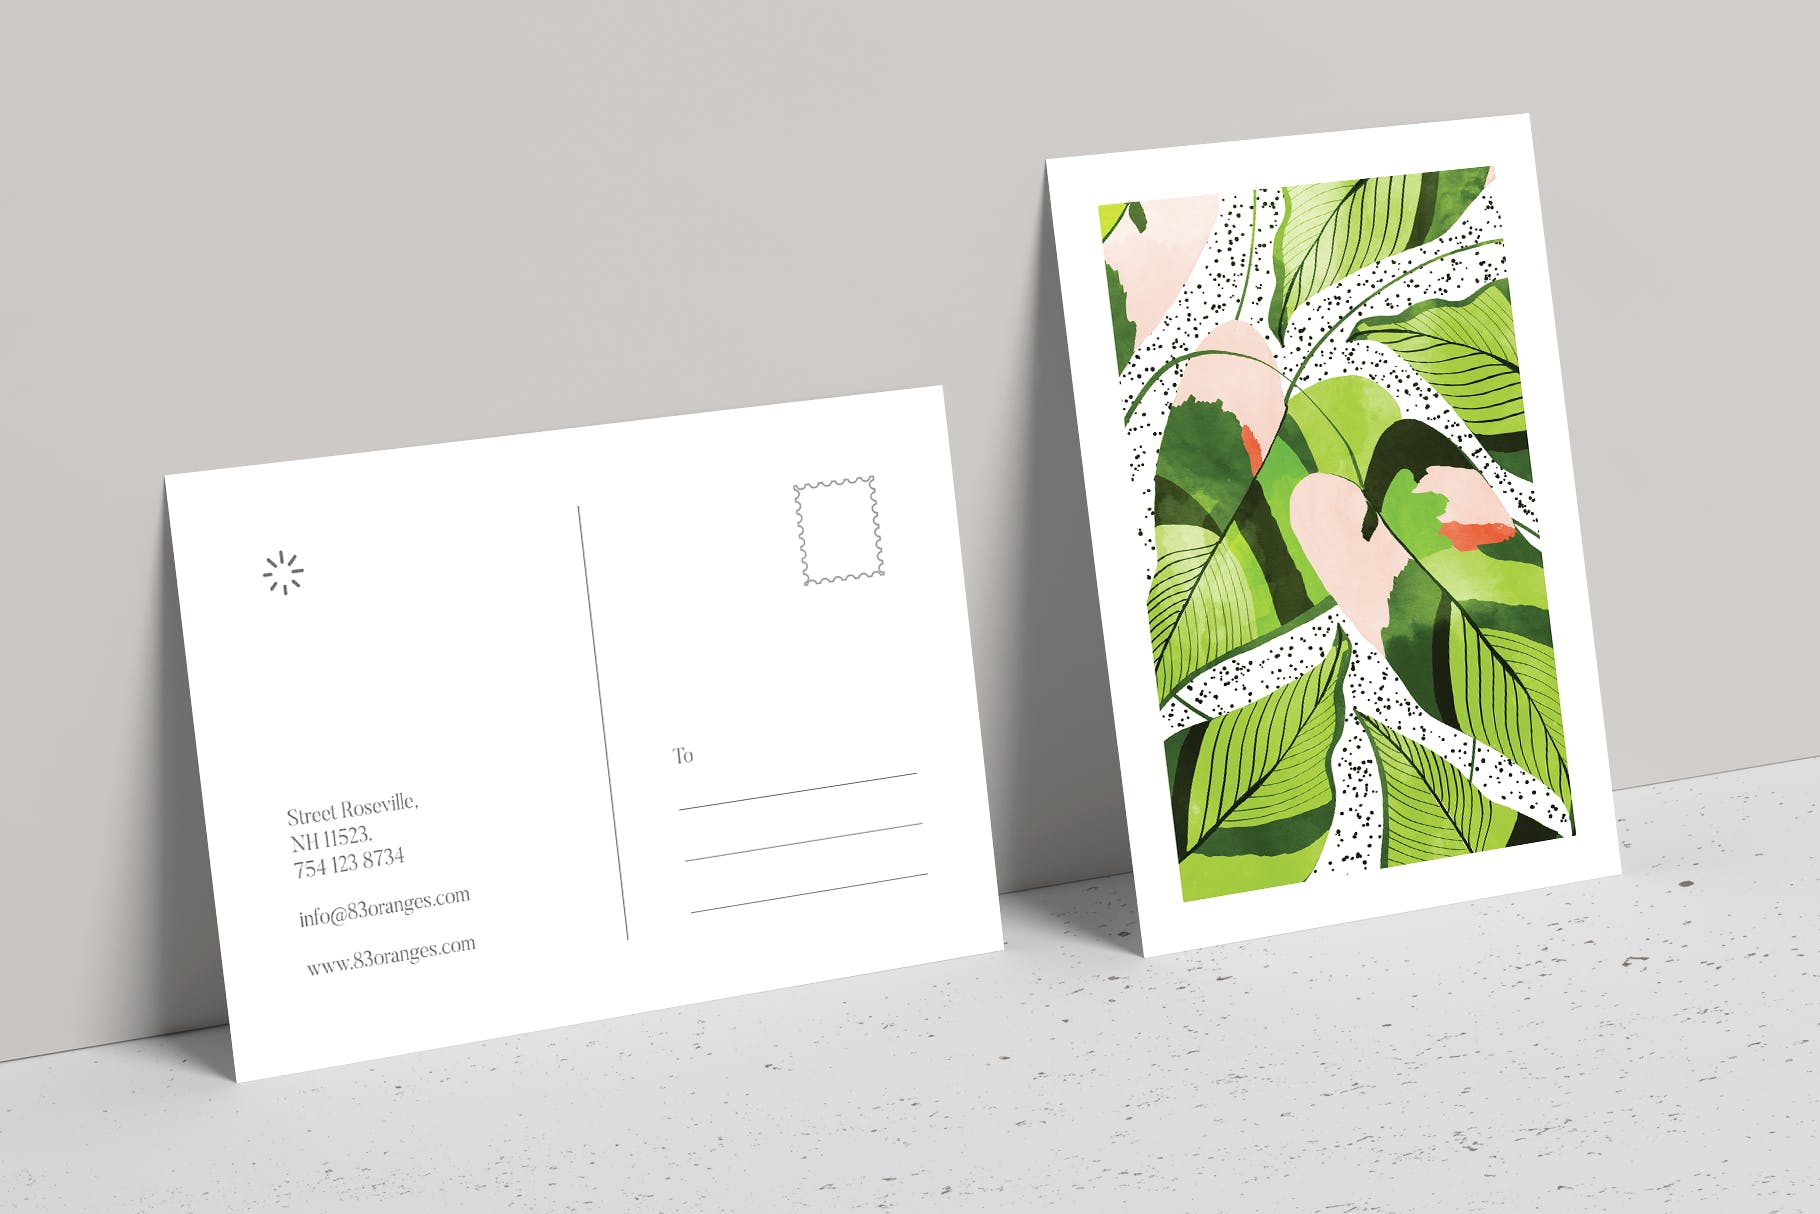 香蕉叶手绘艺术明信片&企业名片设计模板 Blushing Leaves Art & Stationary Kit插图(1)